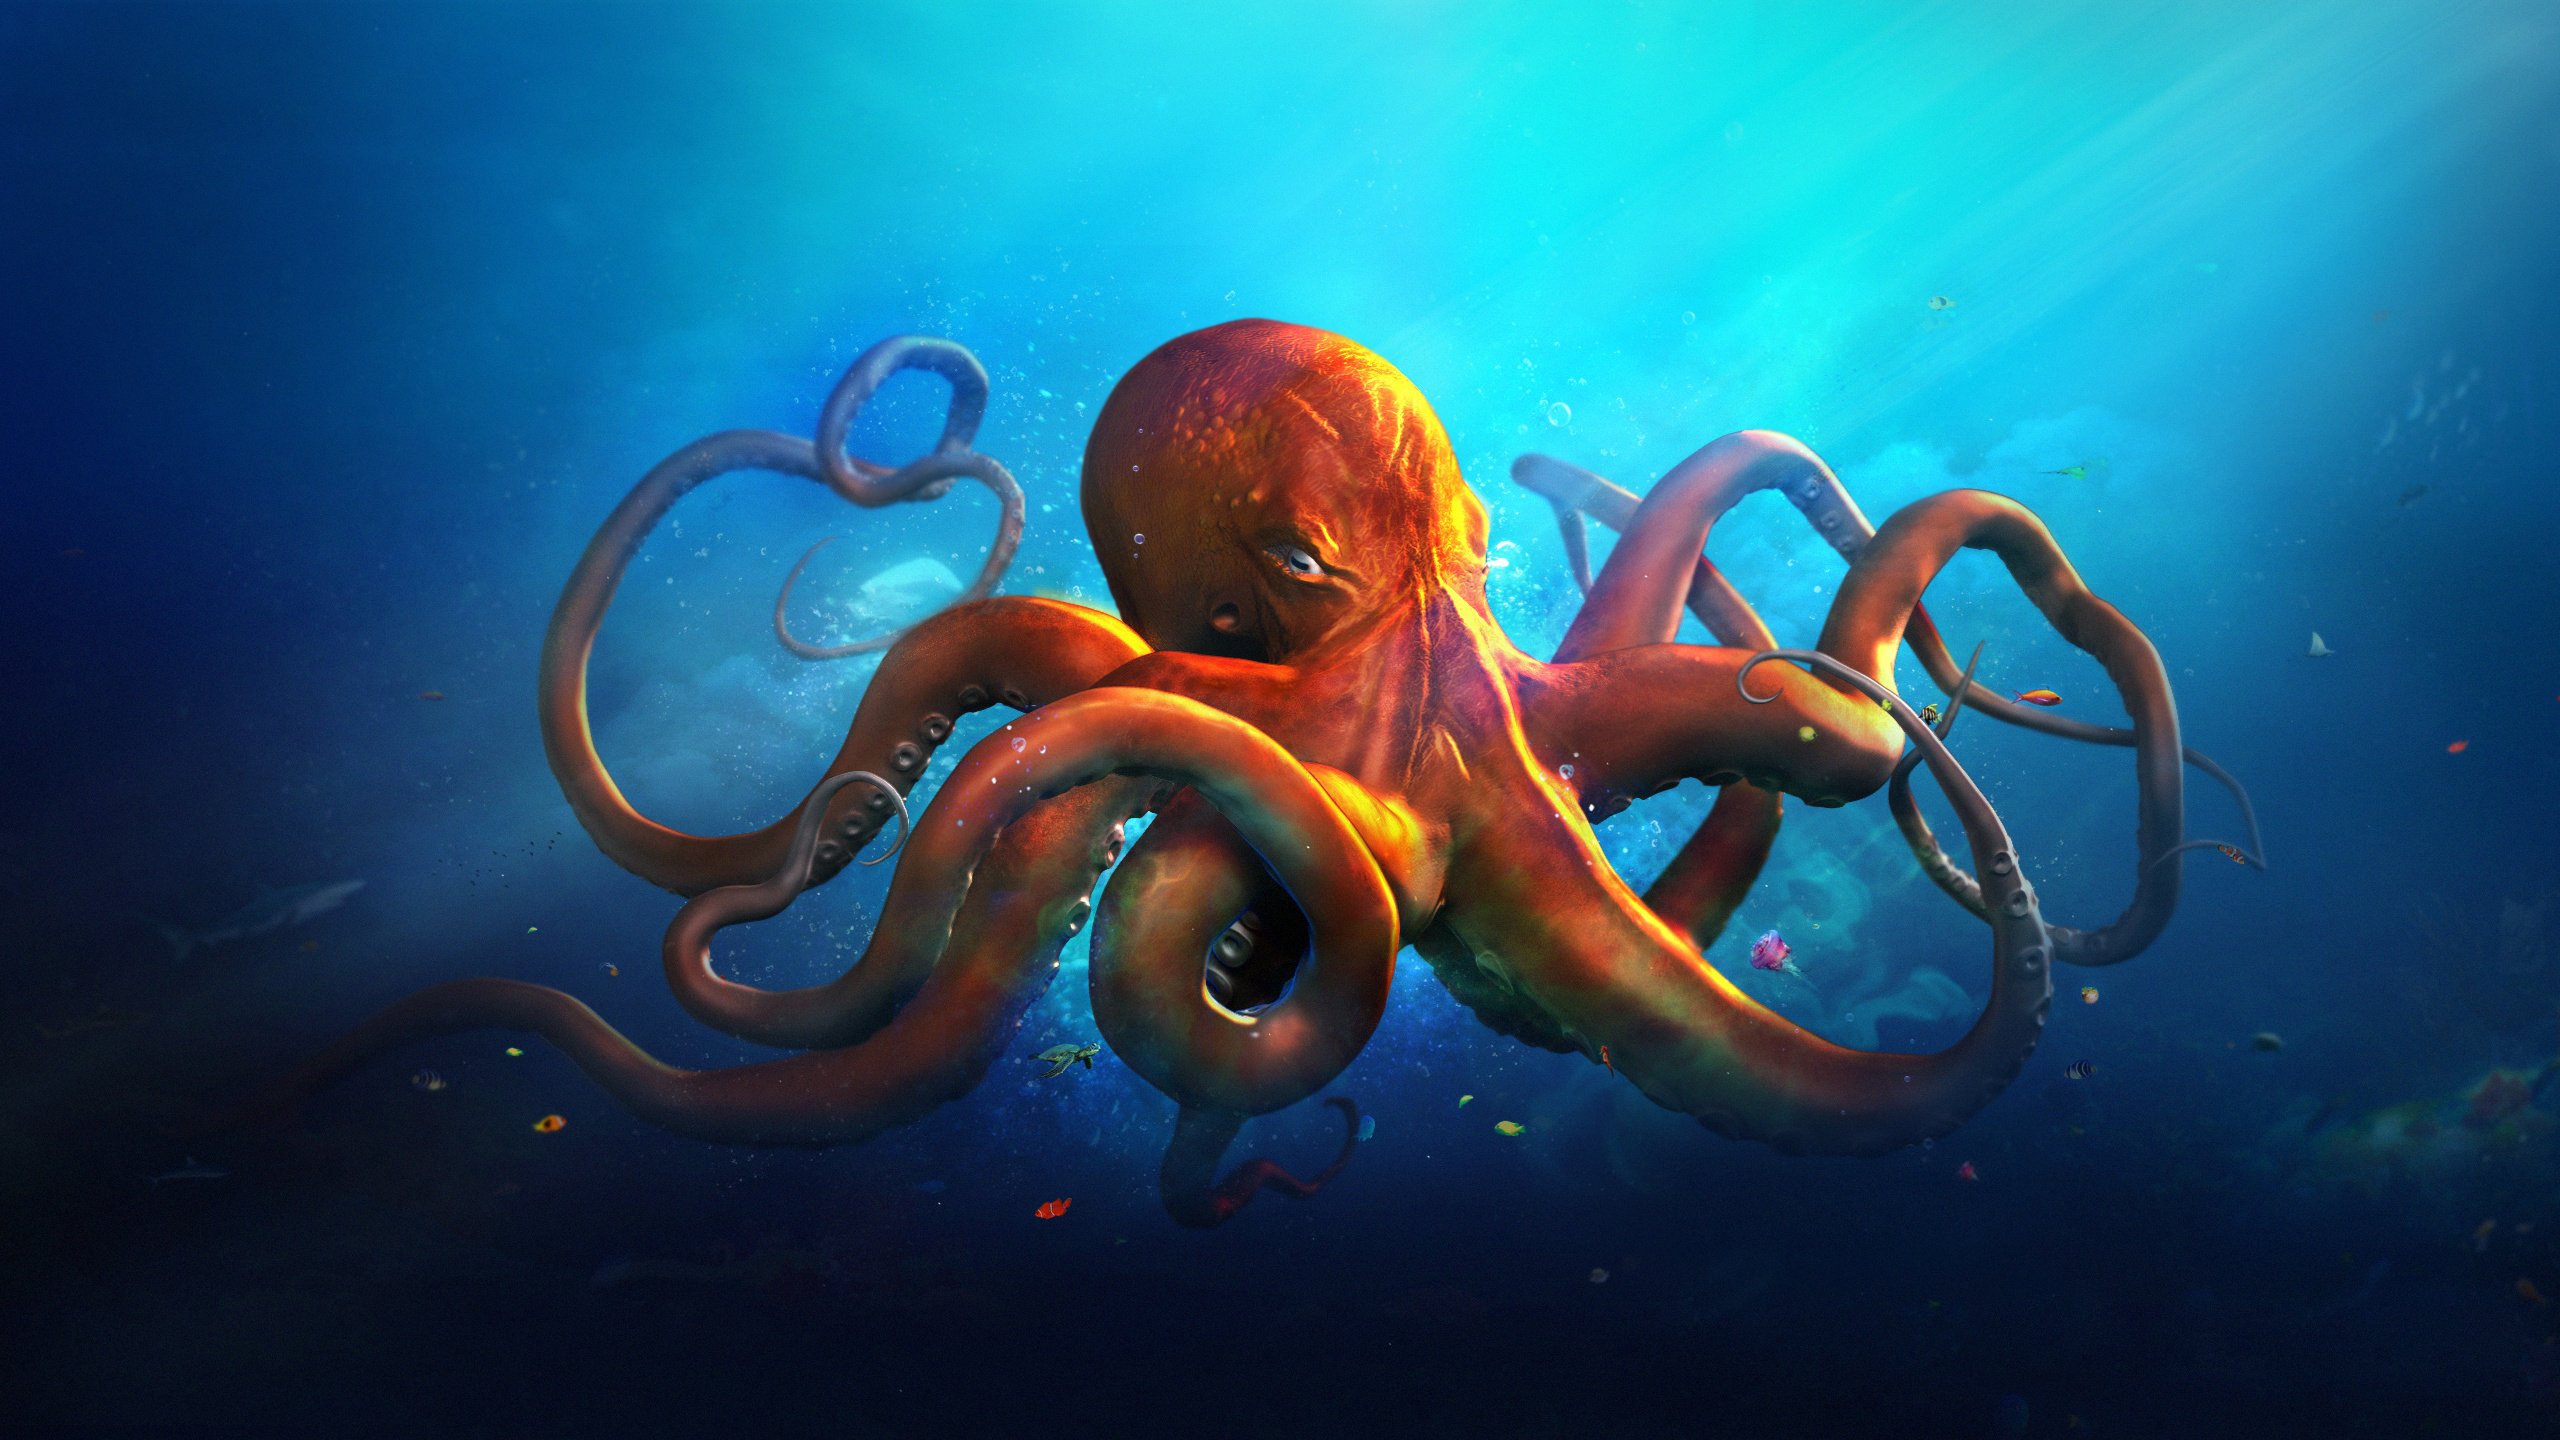 Underwater World Animals Octopus Ocean Sea Fantasy Artwork Art